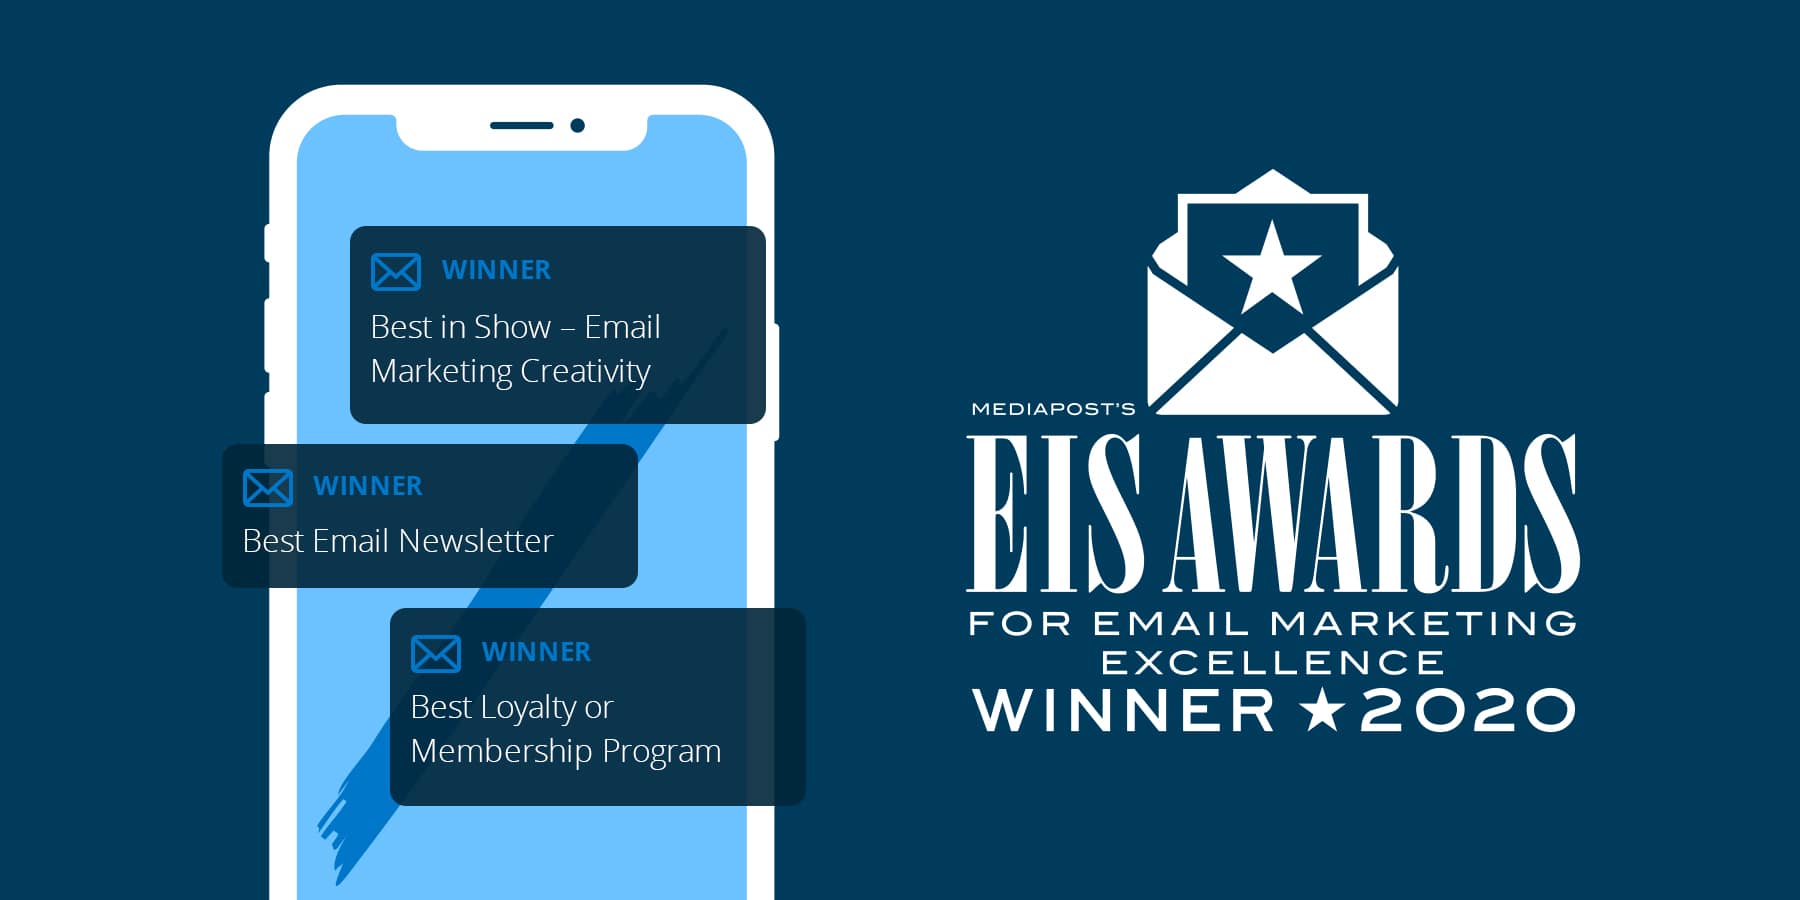 MediaPost's EIS Awards for Email Marketing Excellence - Winner 2020